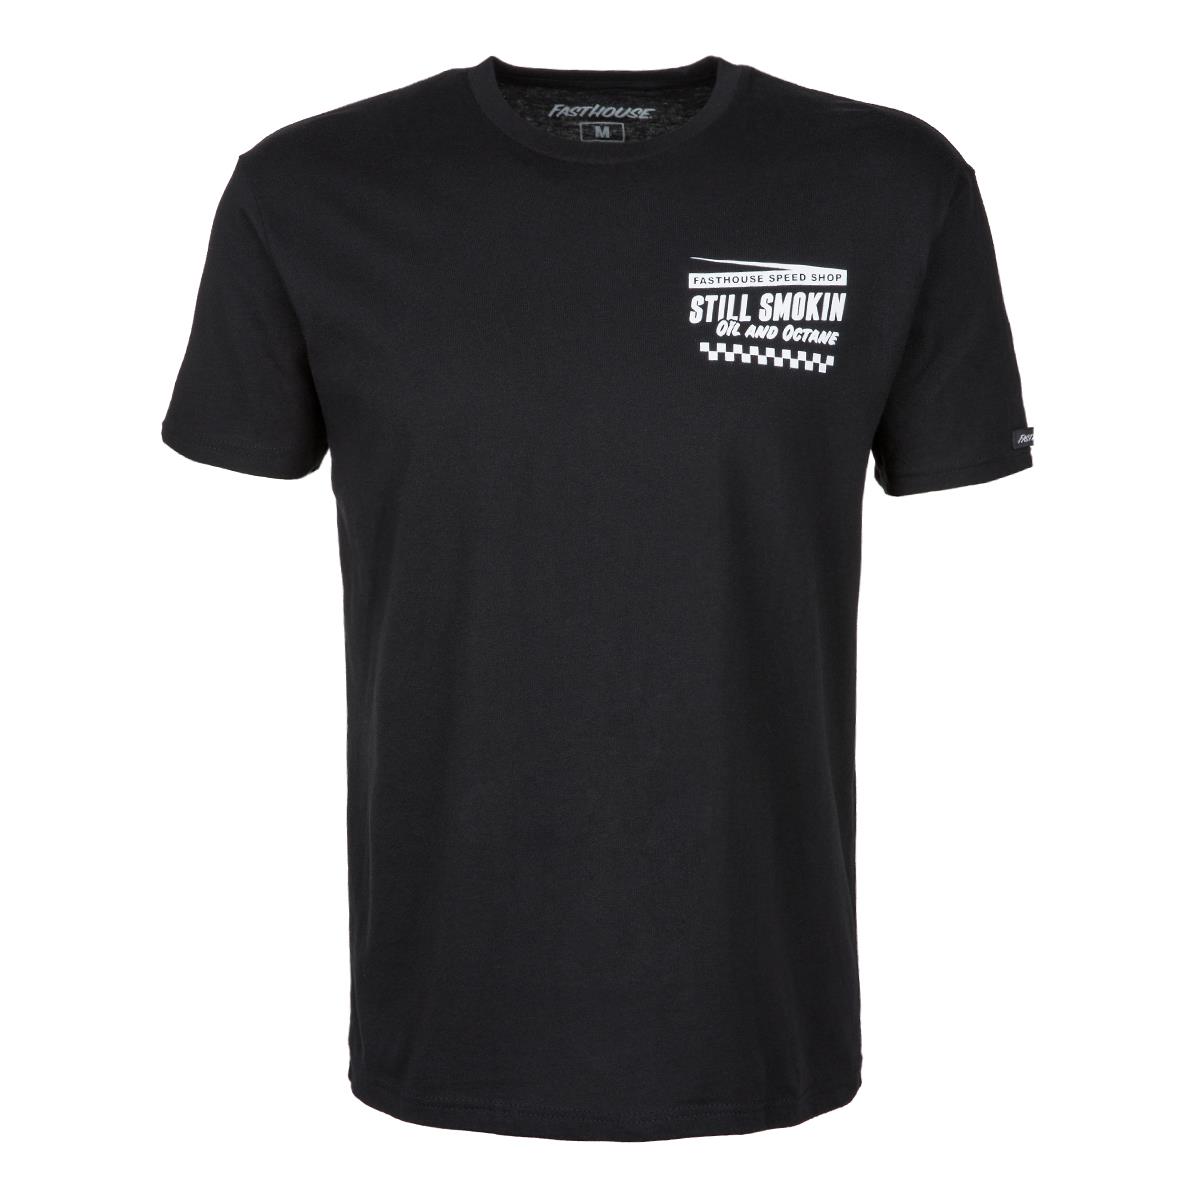 Fasthouse T-Shirt Still Smokin Black